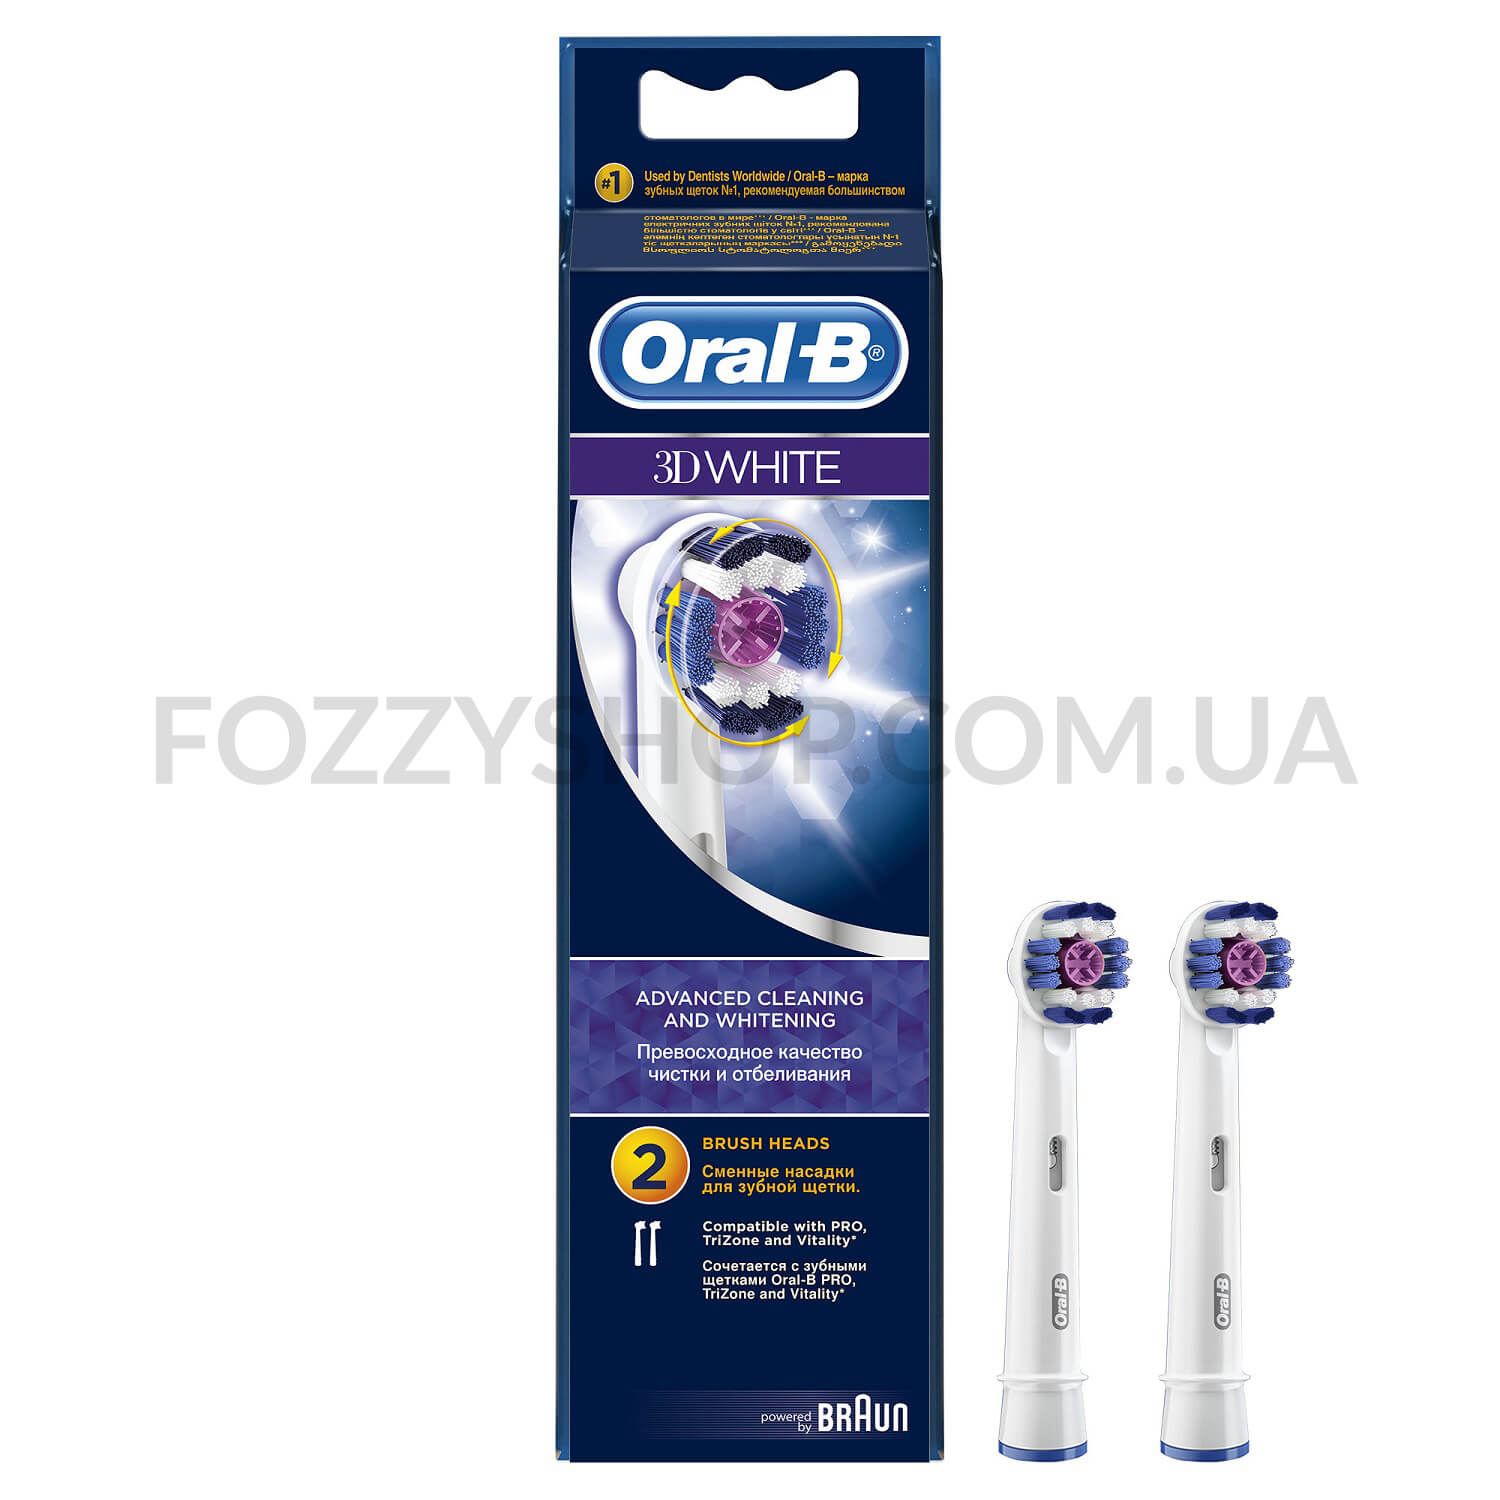 Сменные насадки для электрических зубных щеток Oral-B 3D White, 2 шт